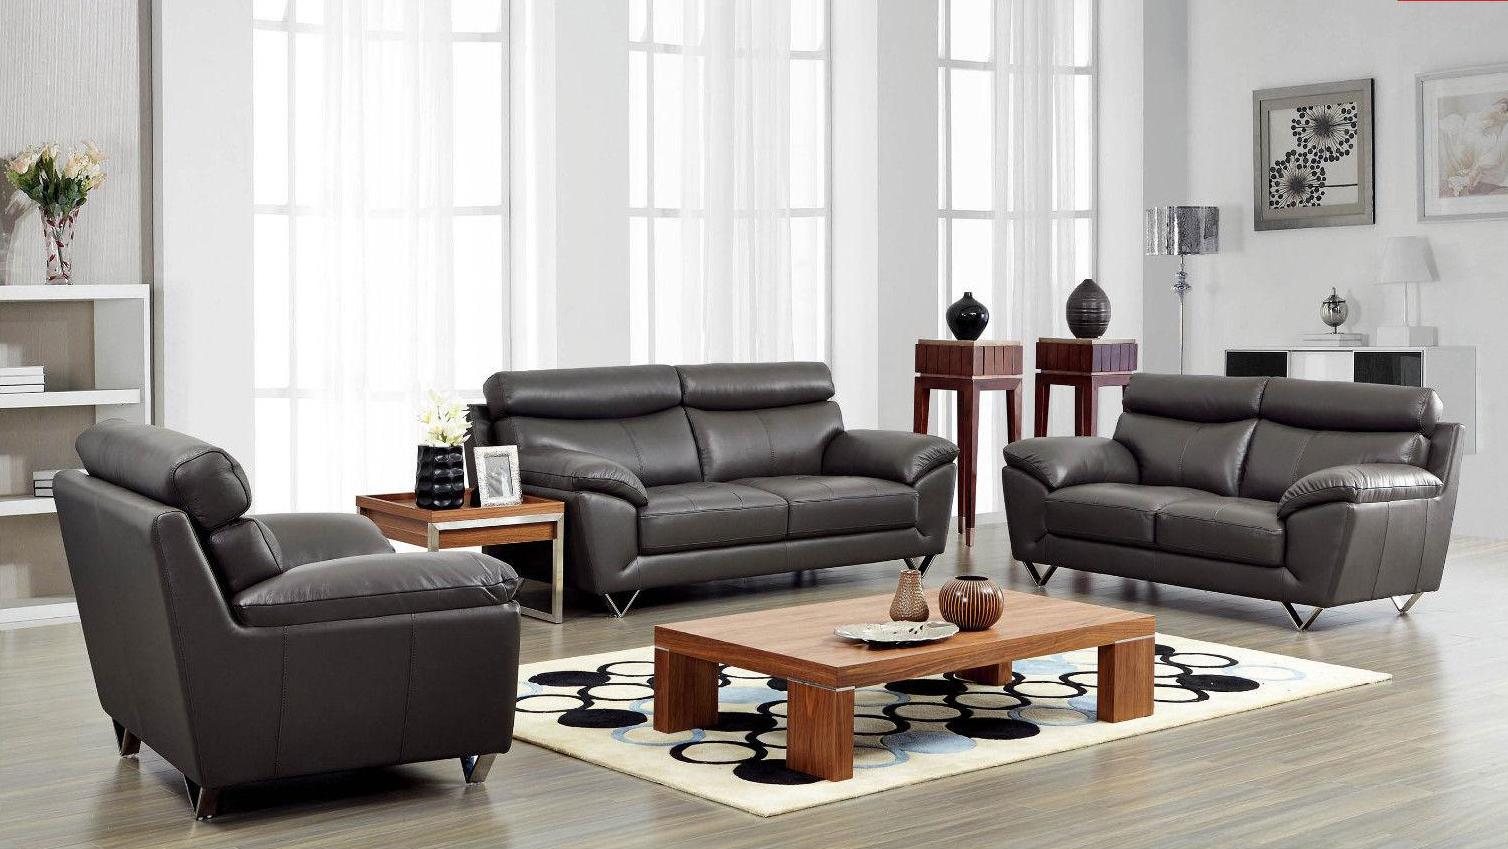 Modern Sofa Loveseat and Chair Set LH2009-S/L/C LH2009-Sofa Set-3 in Dark Gray Leather